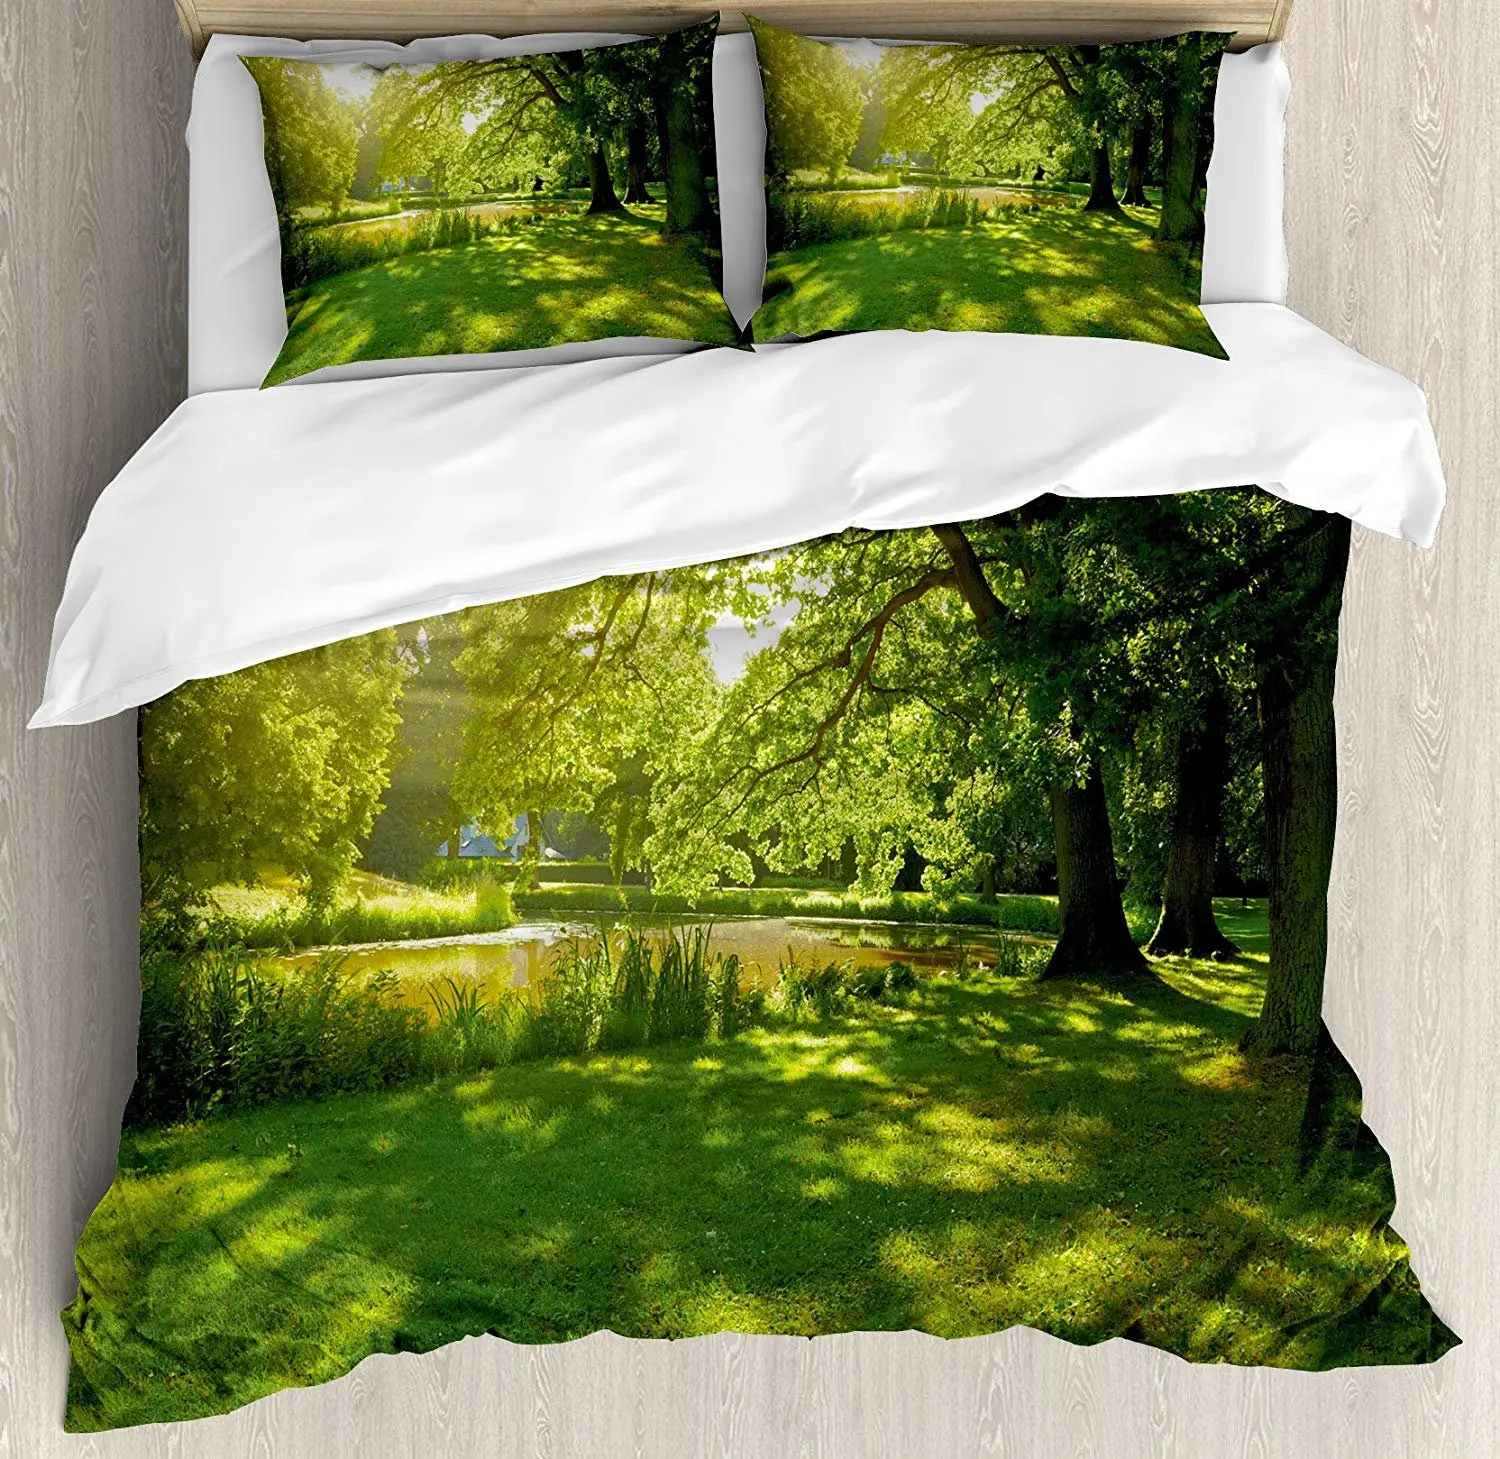 

Green Bedding Set Summer Park in Hamburg Germany Trees Sunlight Forest Nature Theme Scenic Outdoors Duvet Cover Pillowcase